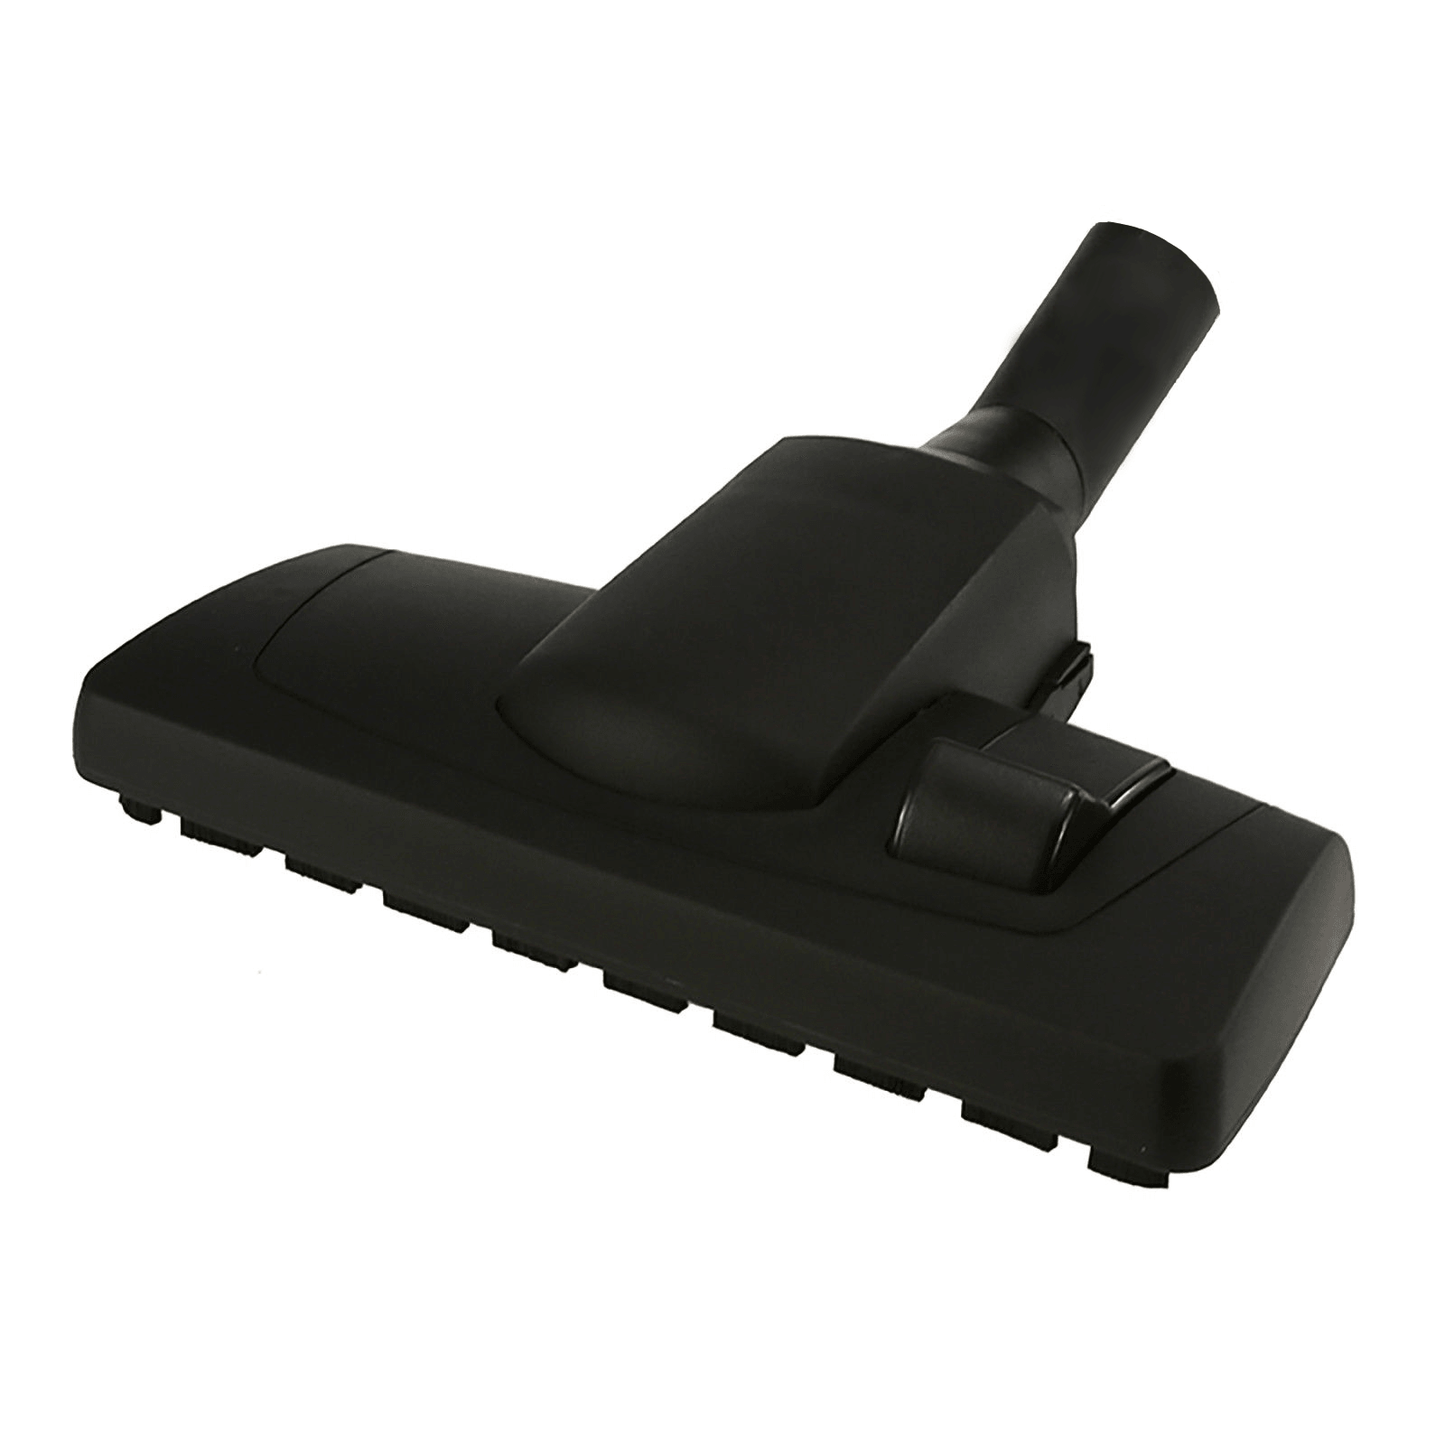 Vacuum Cleaner Floorhead Carpet Brush For Nilfisk Meteor Deluxe Combat Series Sparesbarn